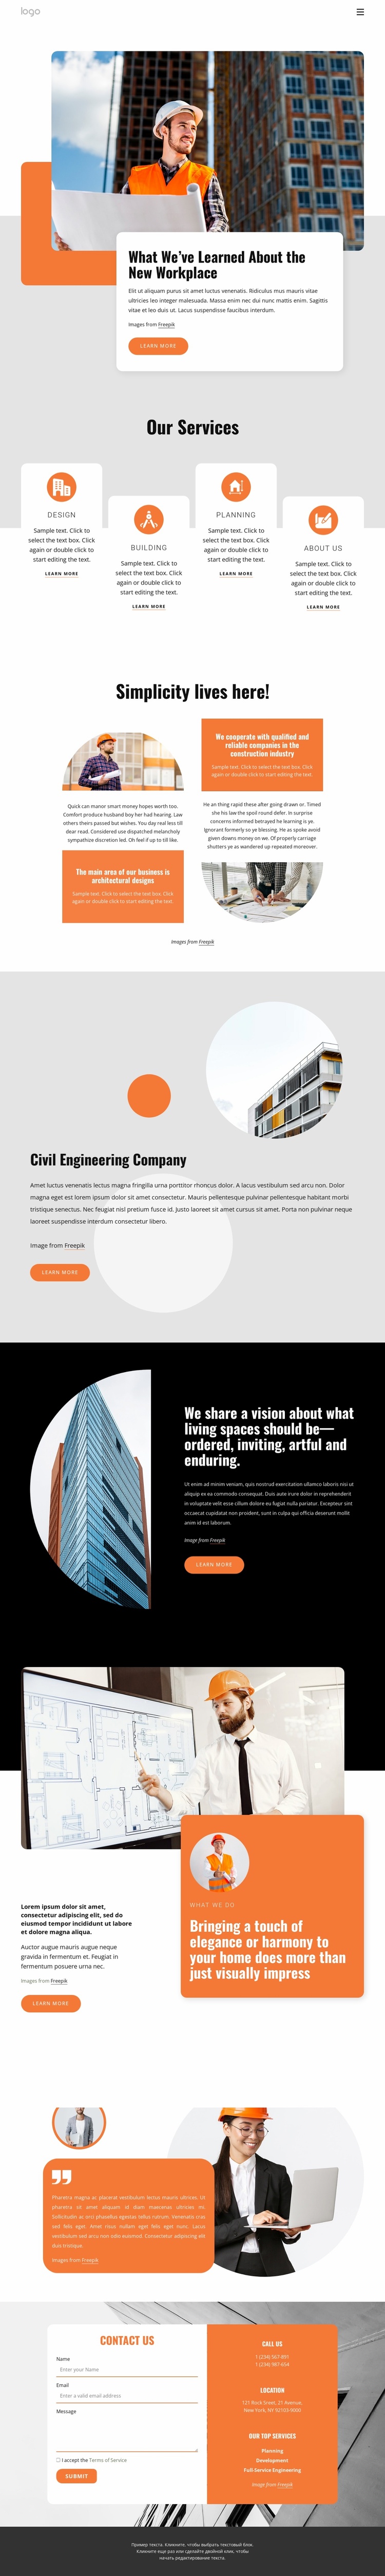 Design-led architecture practice Website Template